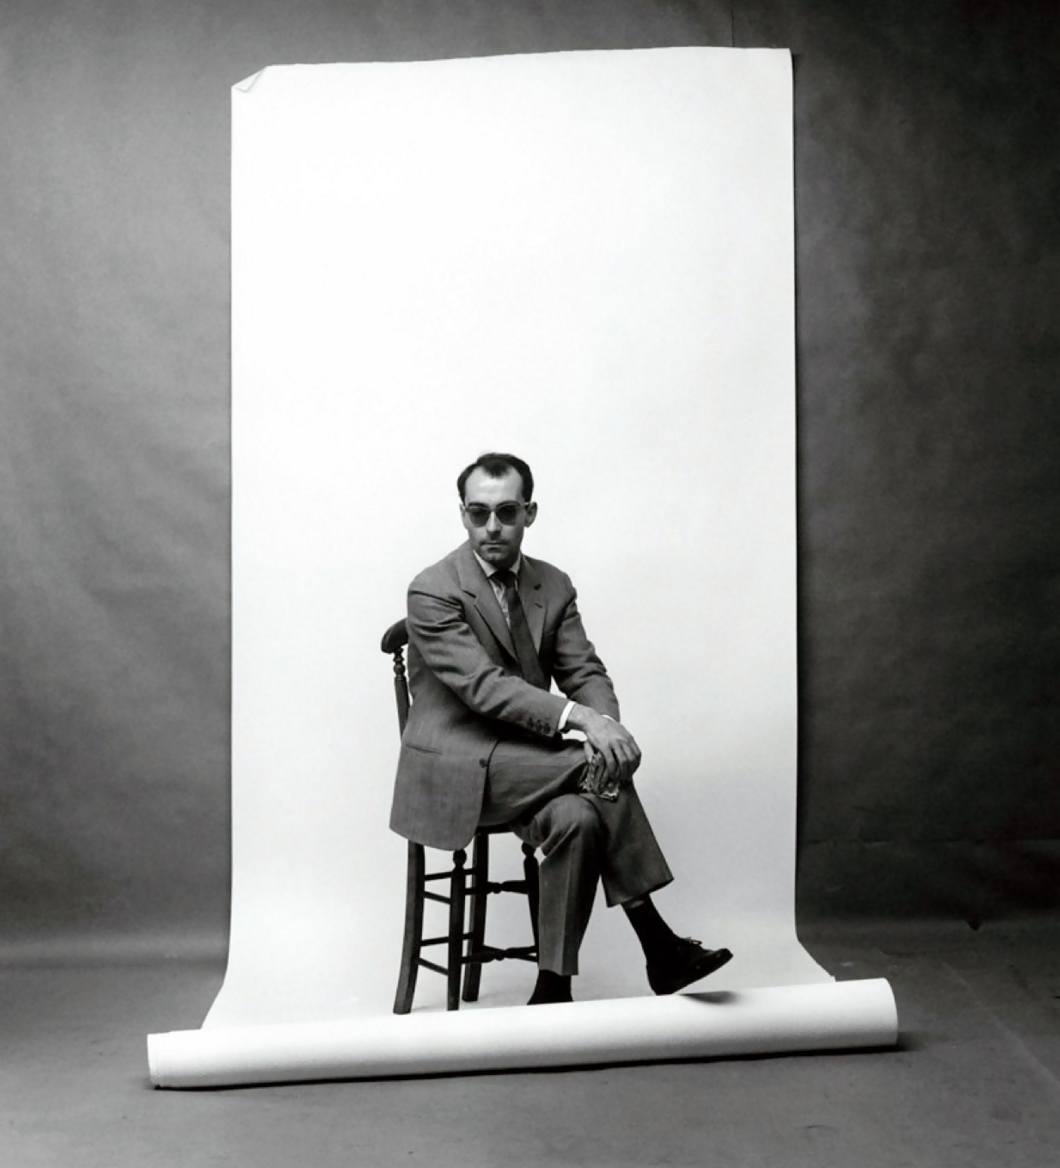  \" Happy 85th birthday to the master, Jean-Luc Godard! 